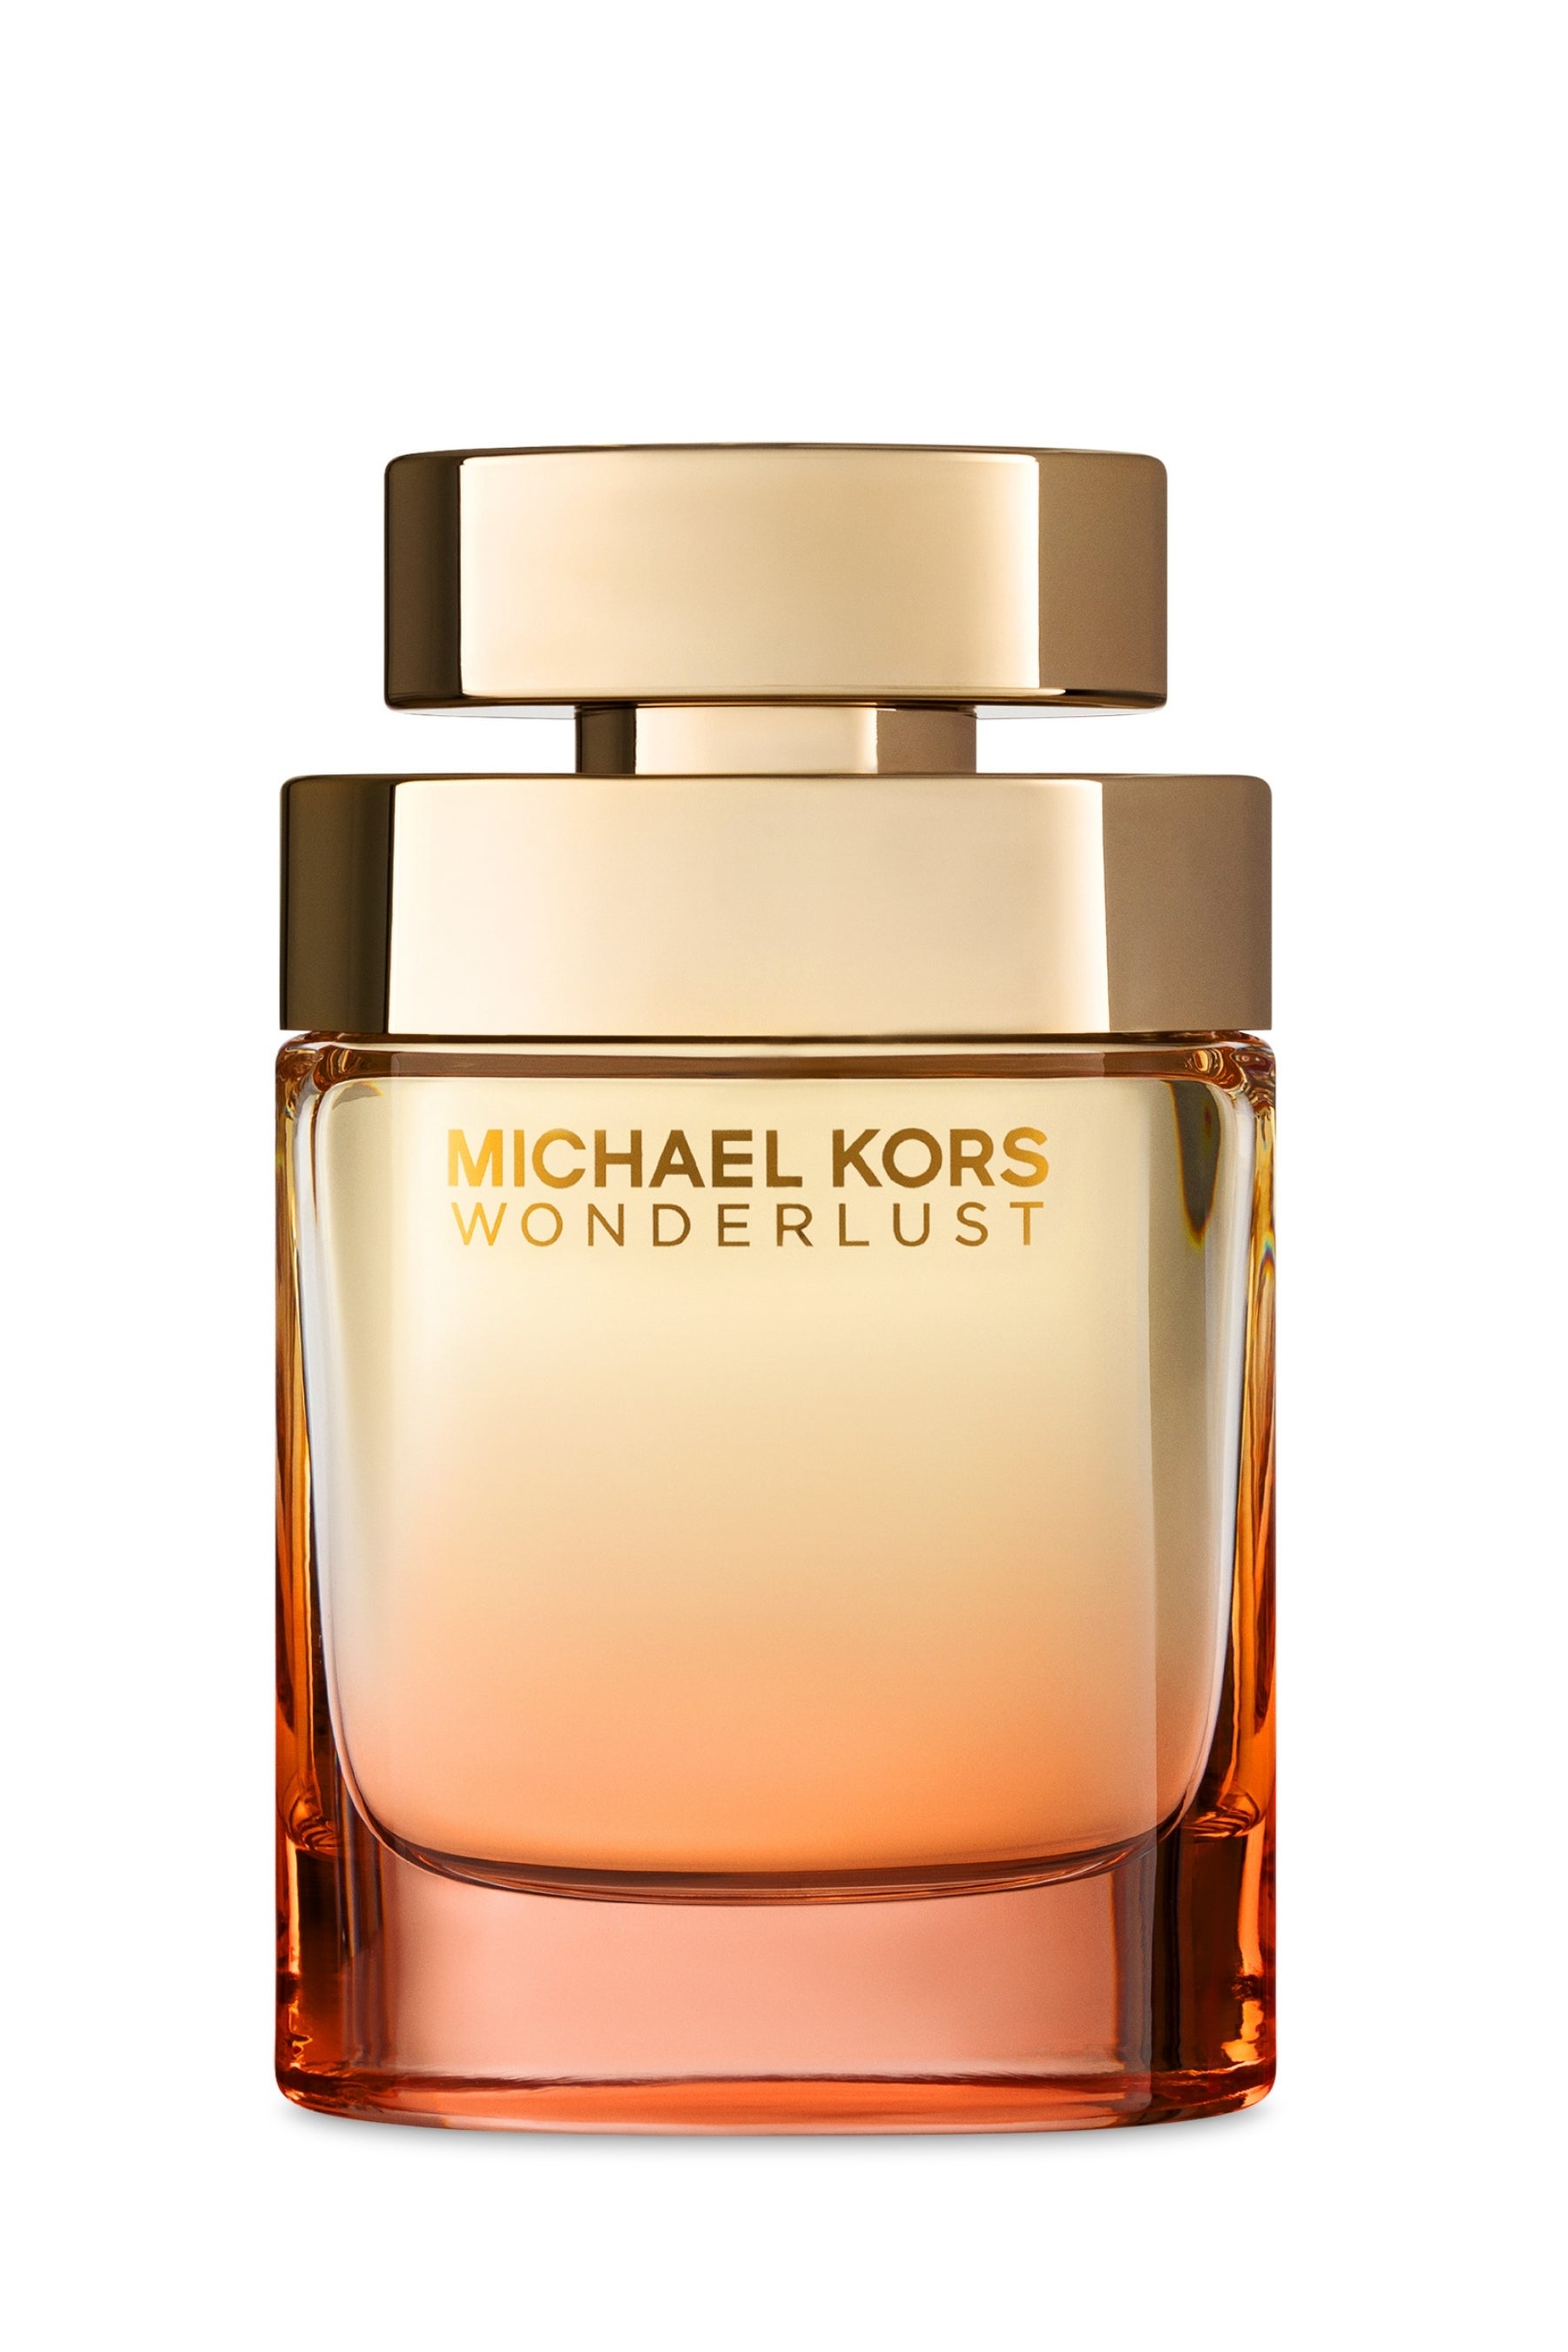 Michael Kors Wonderlust eau de parfum for women  notinocouk